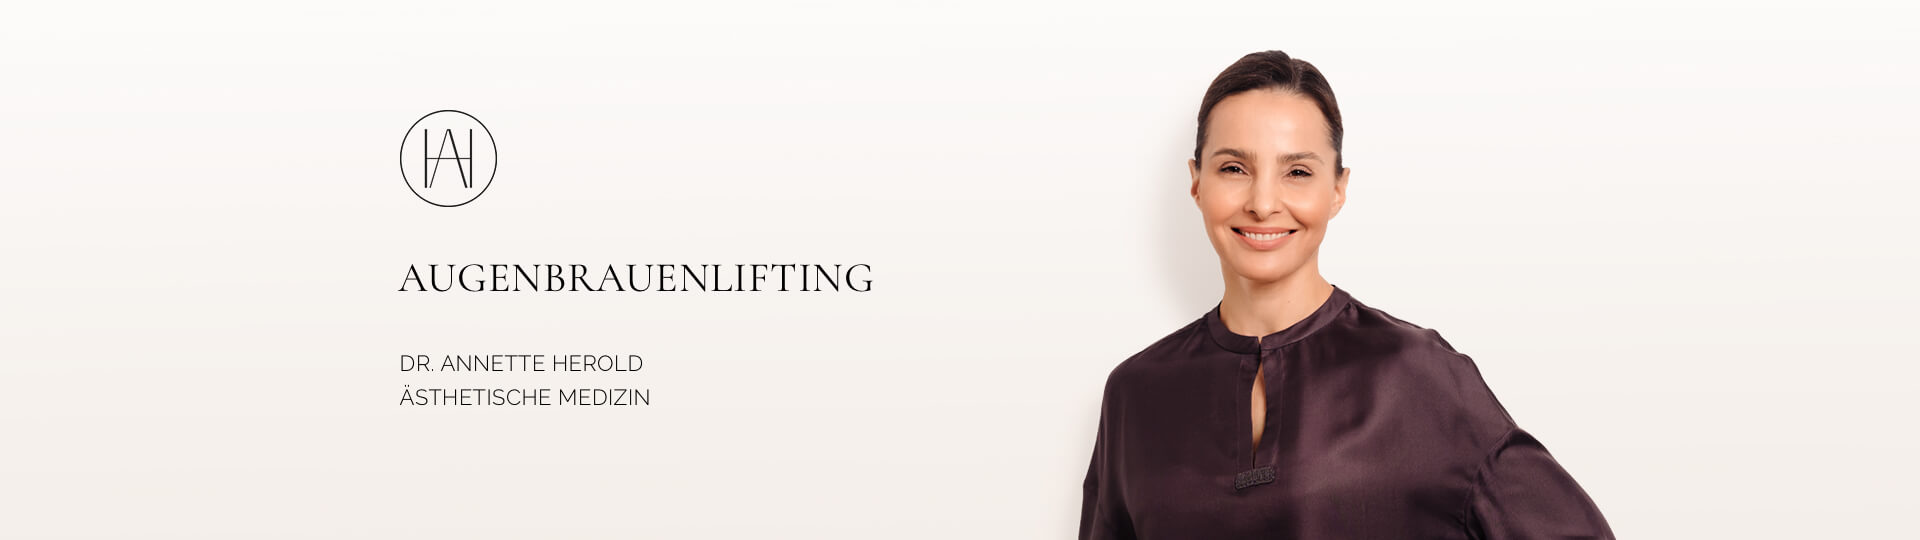 Augenbrauenlifting Düsseldorf, Dr. Annette Herold, Aesthetics Redefined 